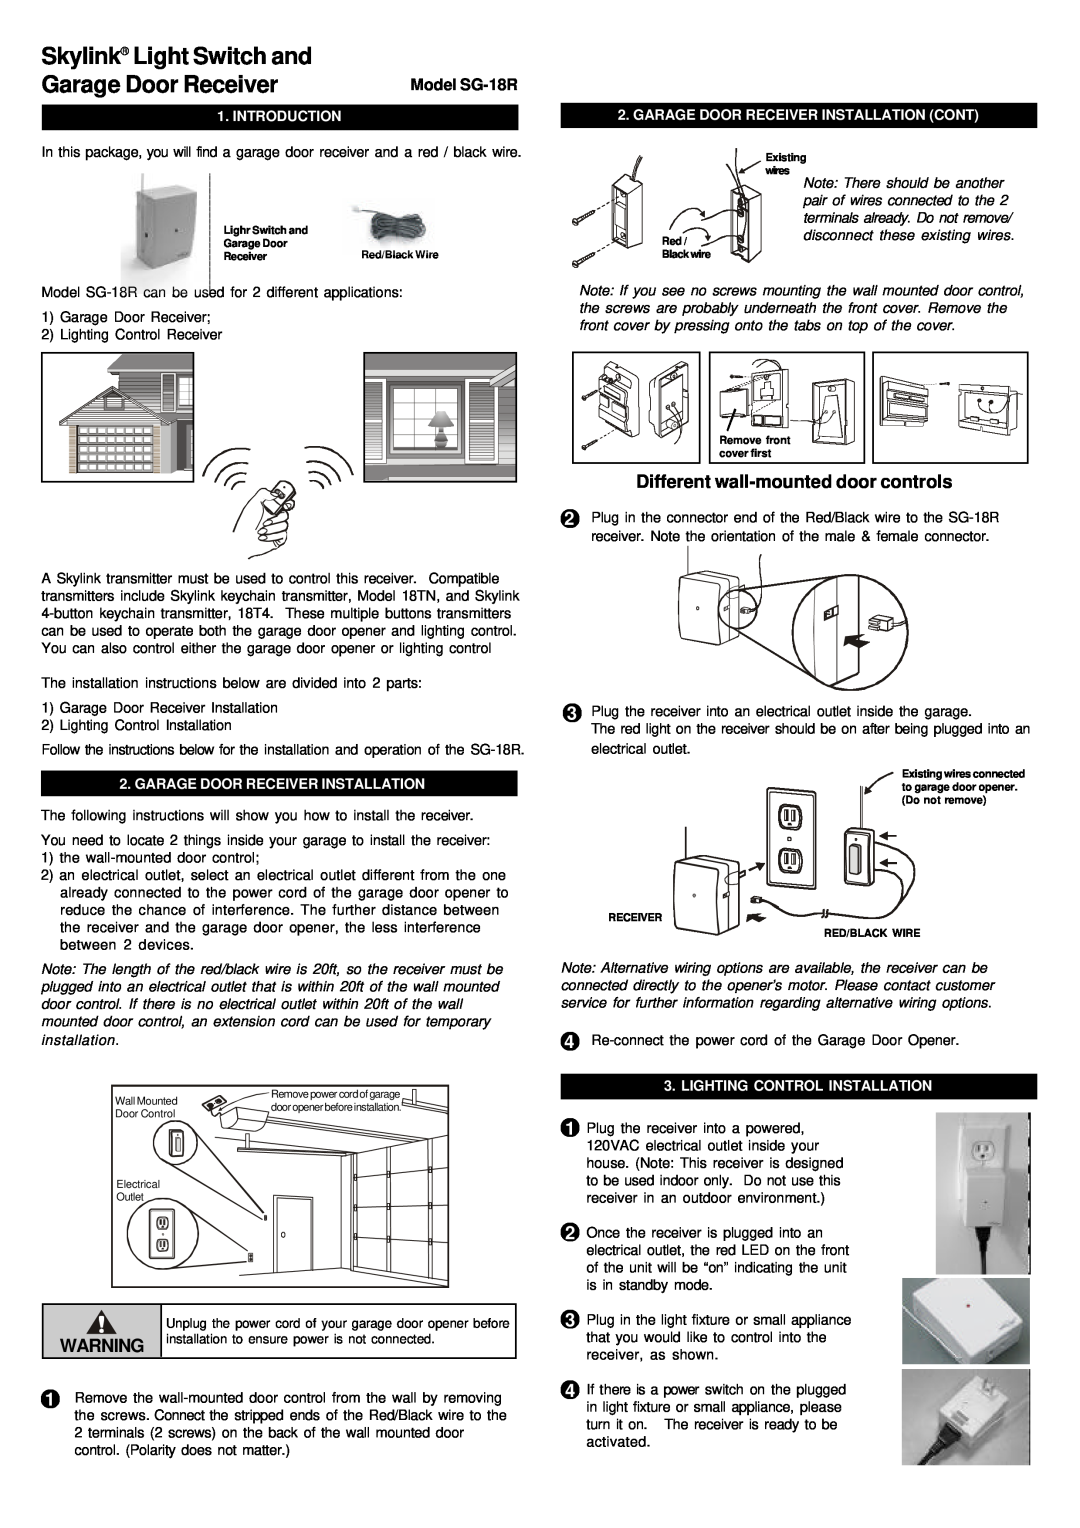 SkyLink installation instructions Model SG-18R, Introduction, Garage Door Receiver Installation 